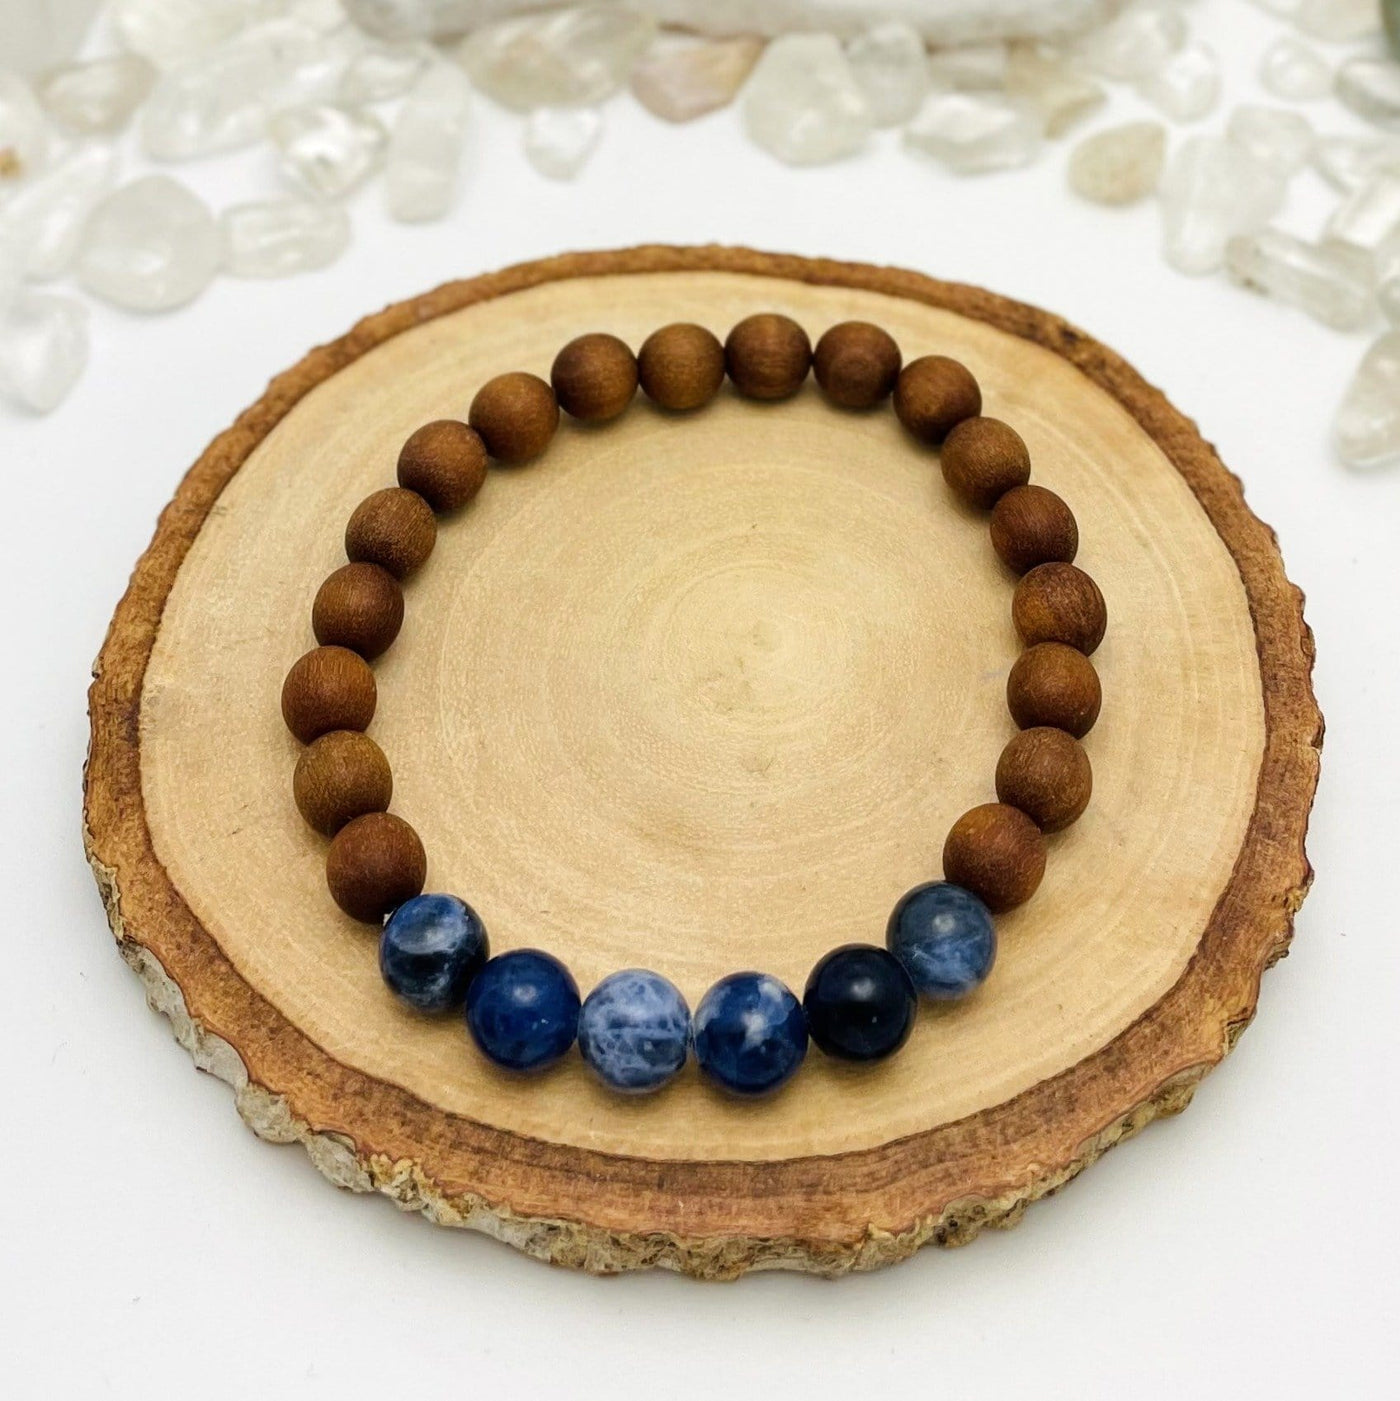 one sandalwood bead bracelet with sodalite for details